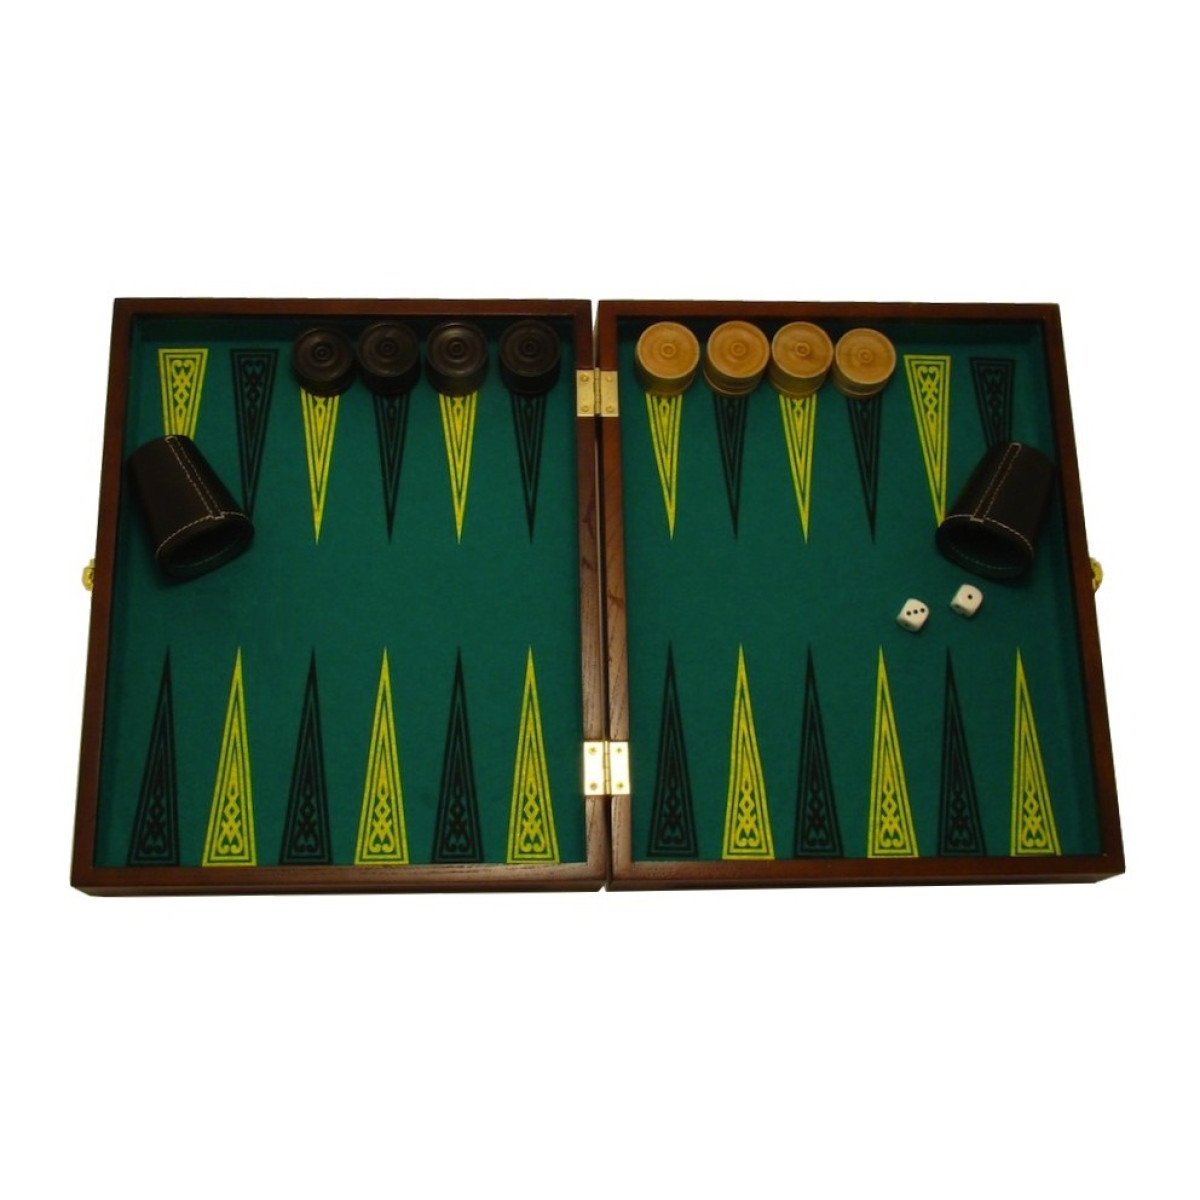 Jacquetbak / Backgammon massieve eik kopen op